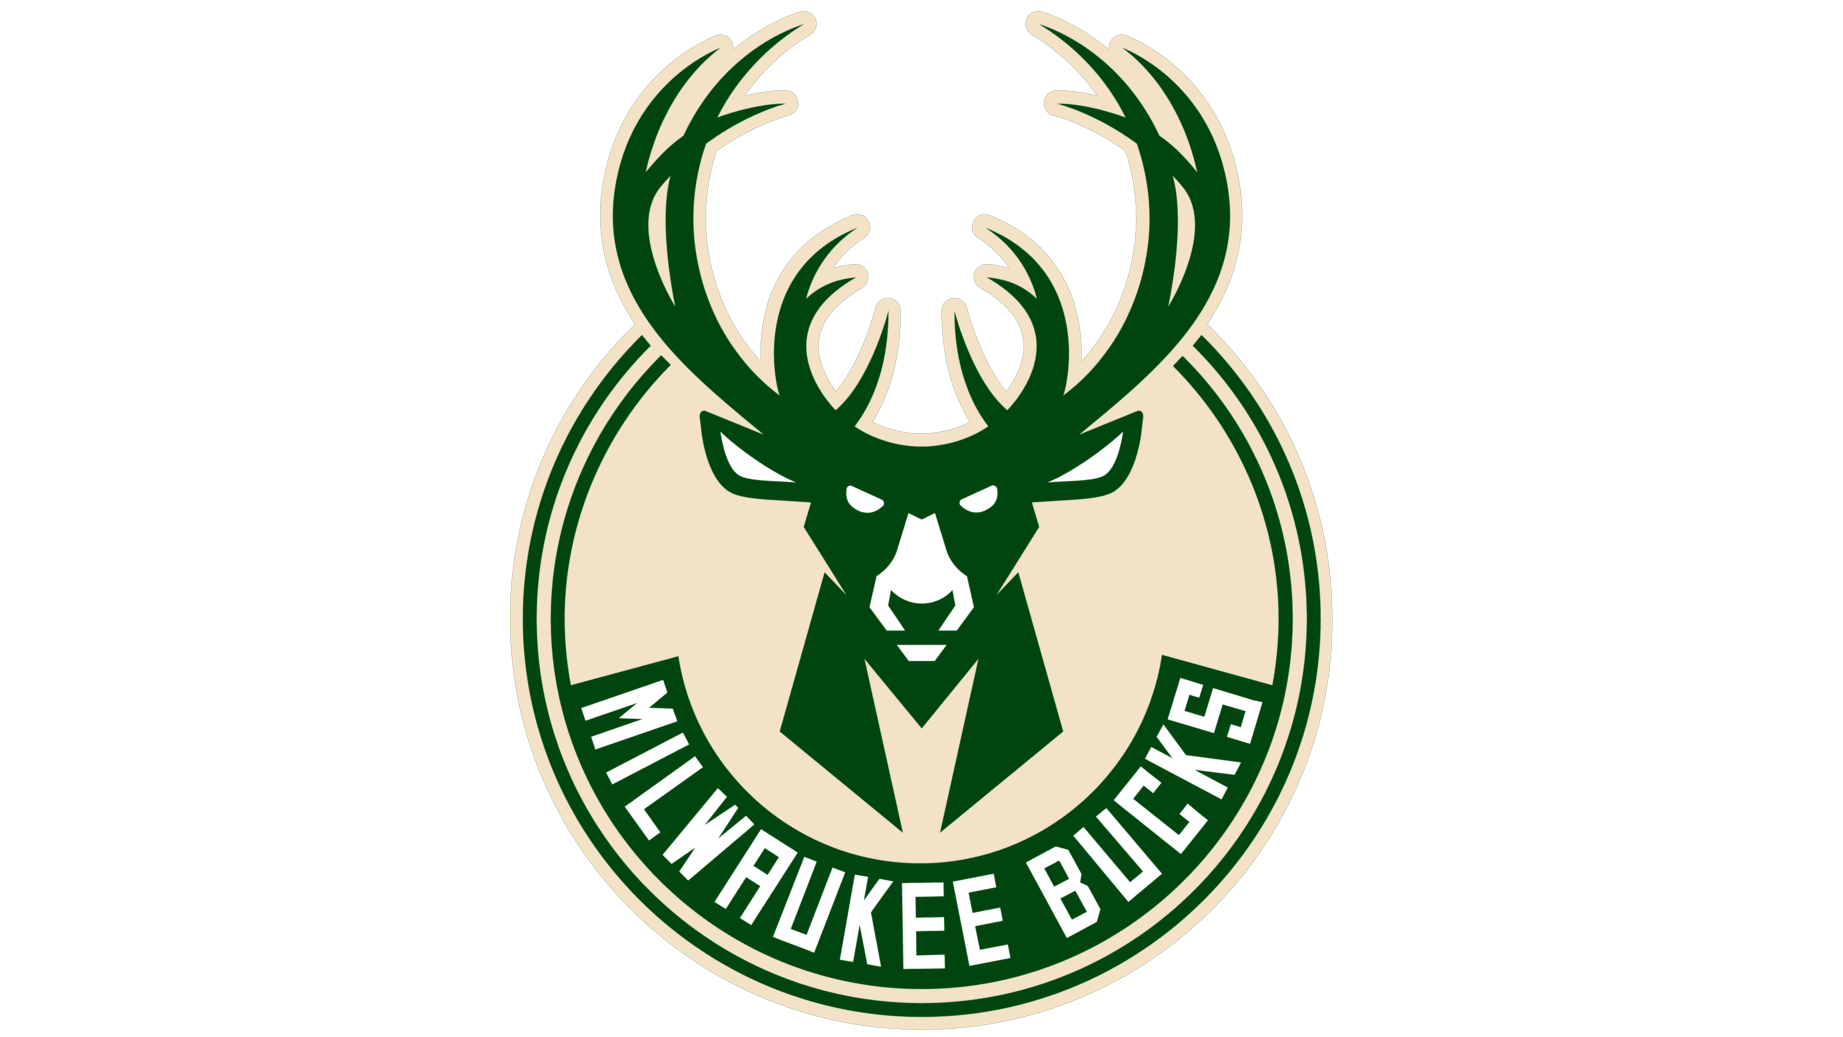 Milwaukee bucks logo